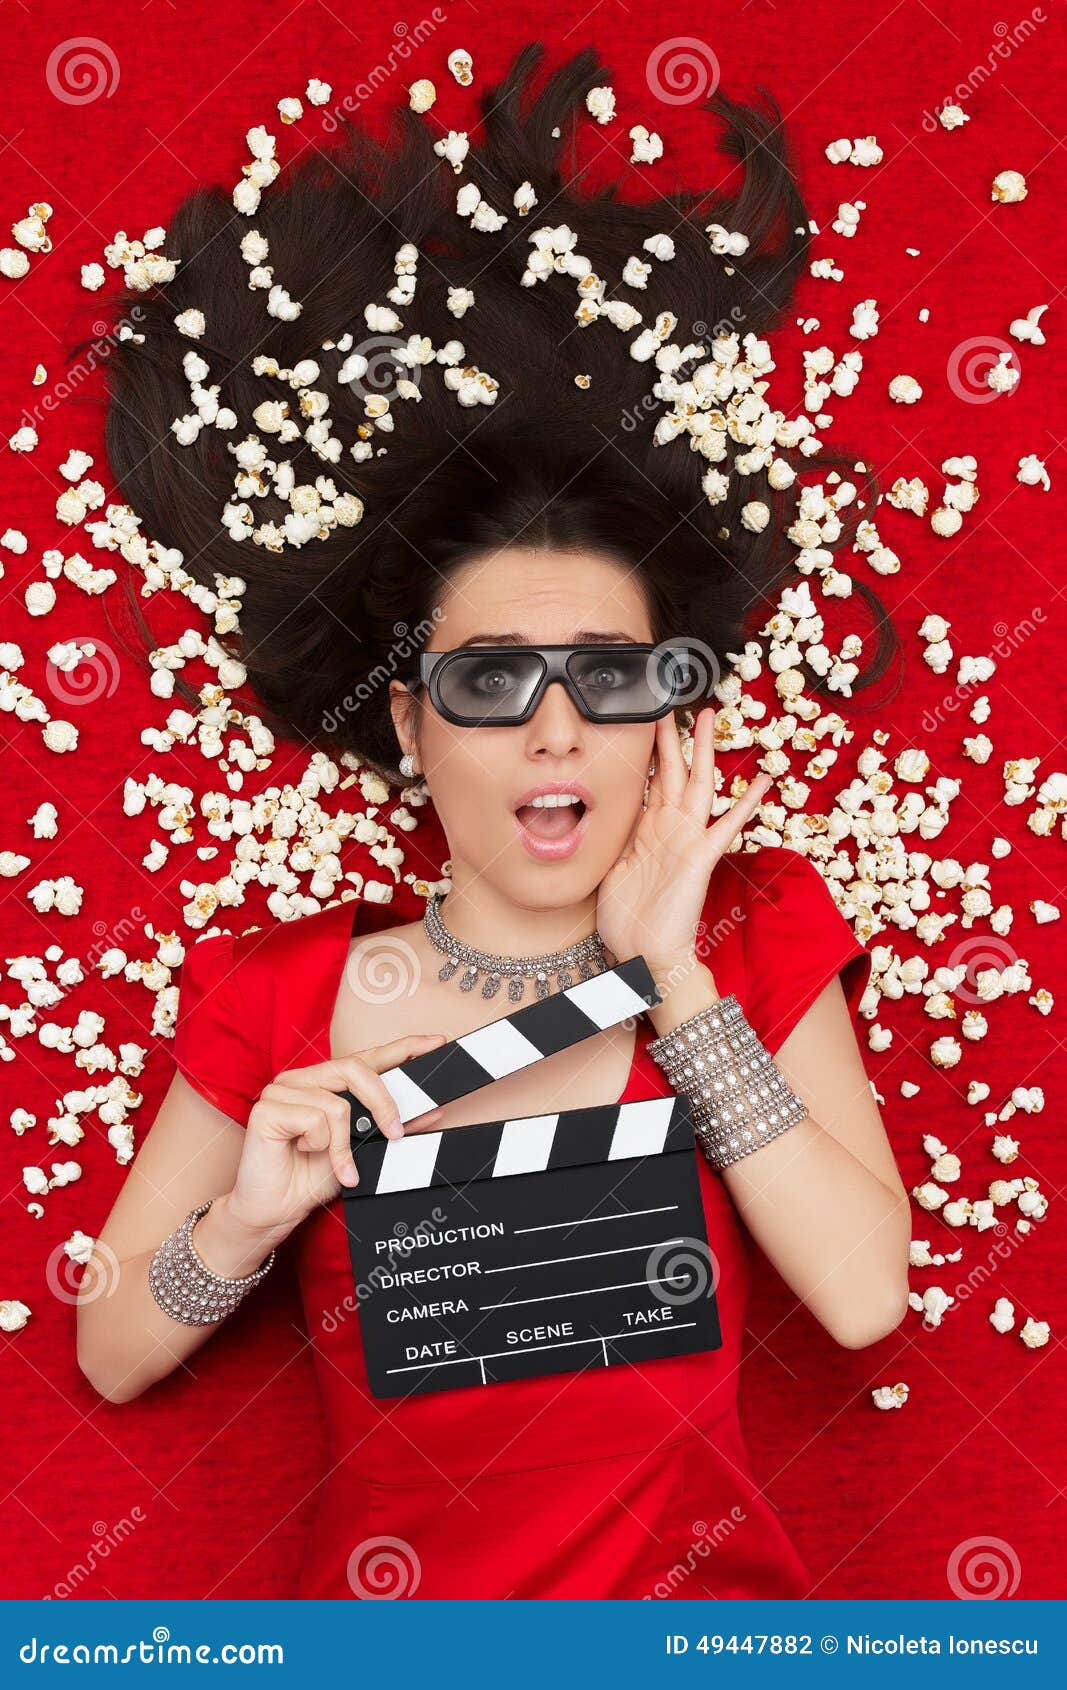 surprised girl with 3d cinema glasses, popcorn director clapboard